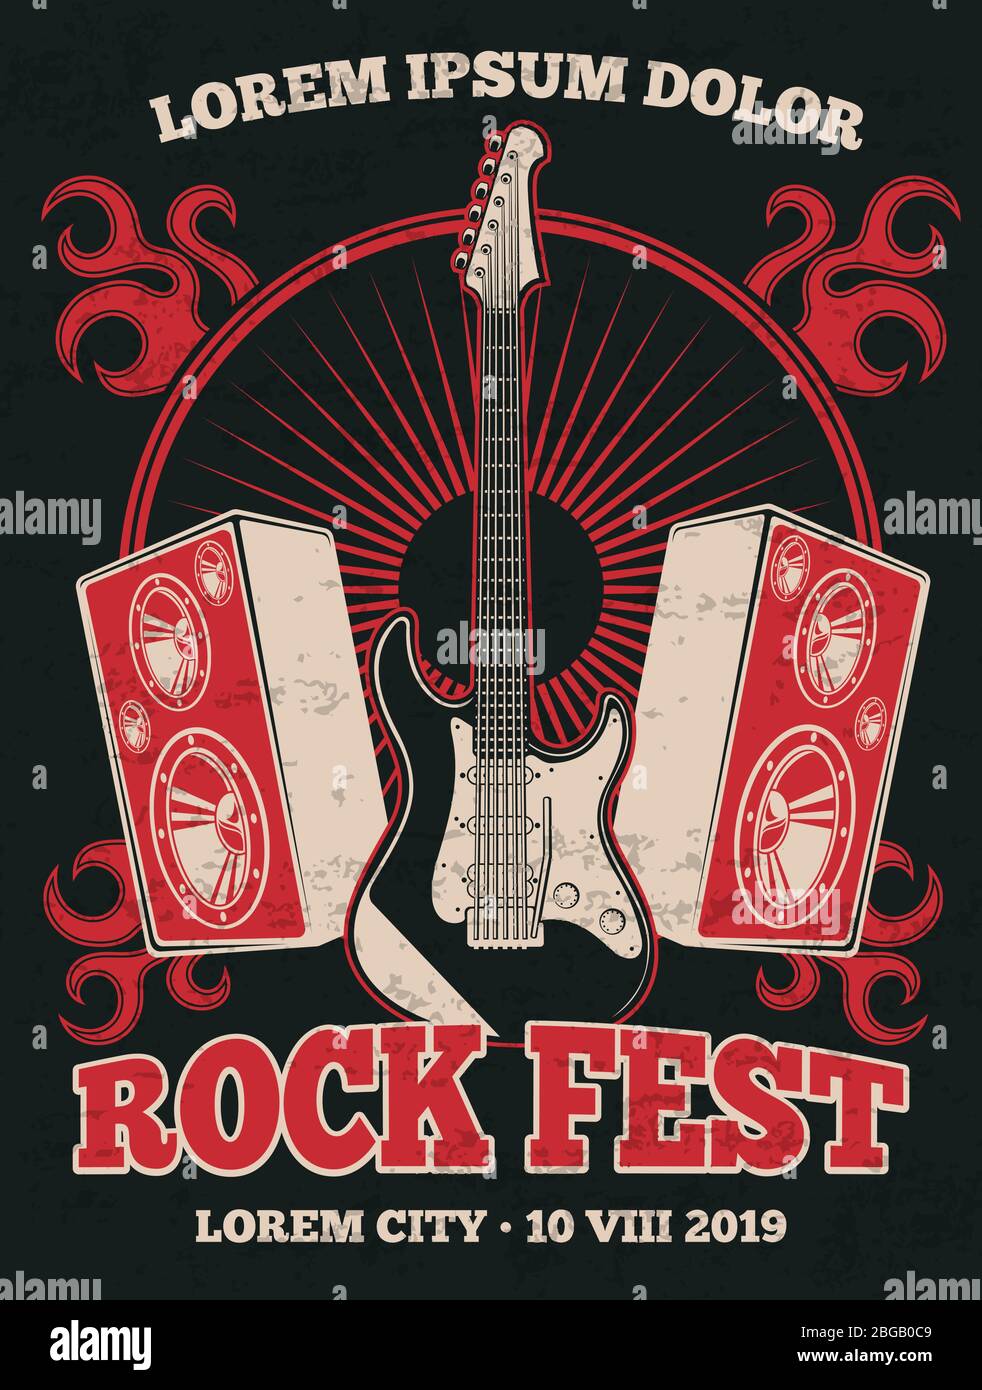 Retro Rock Band Vektor Poster mit Gitarre. Rock Musik Festival Grunge Illustration Banner in rot schwarz Stock Vektor